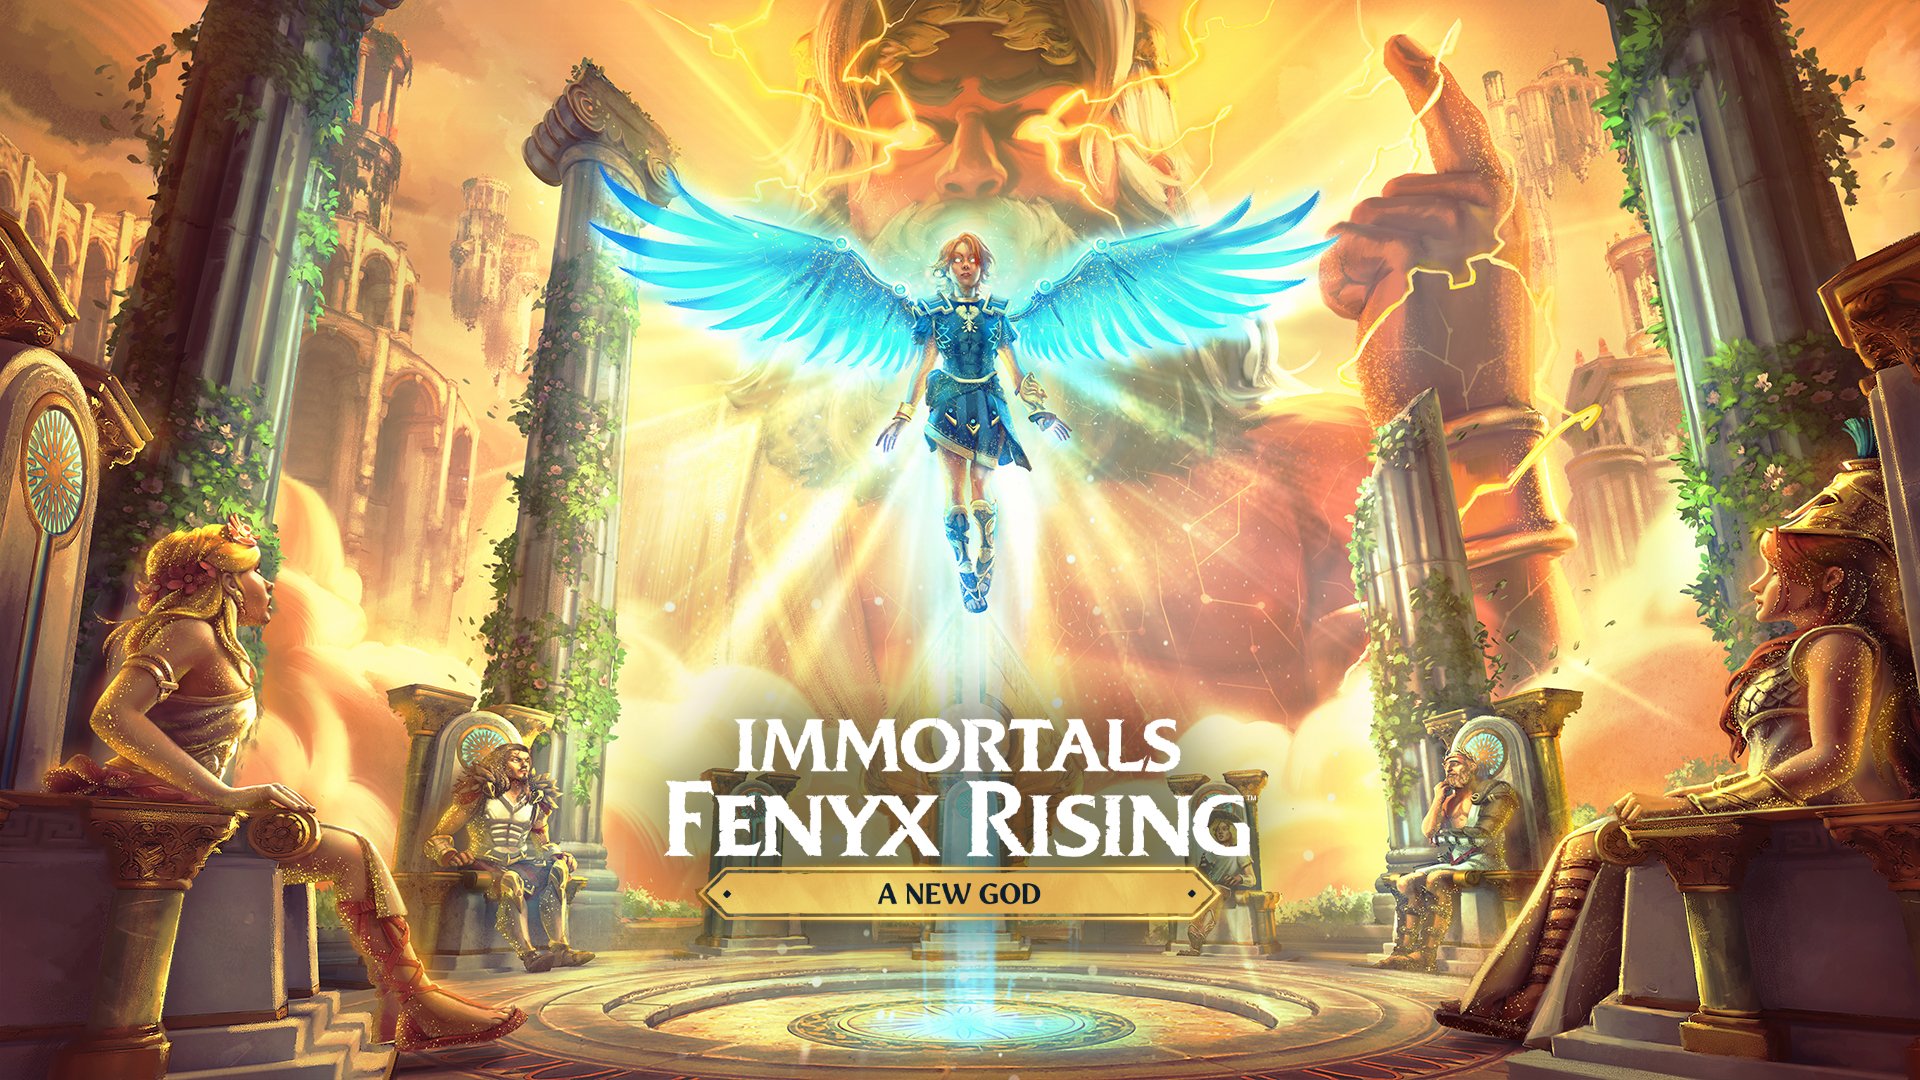 Jogo Xbox One Immortals Fenyx Rising